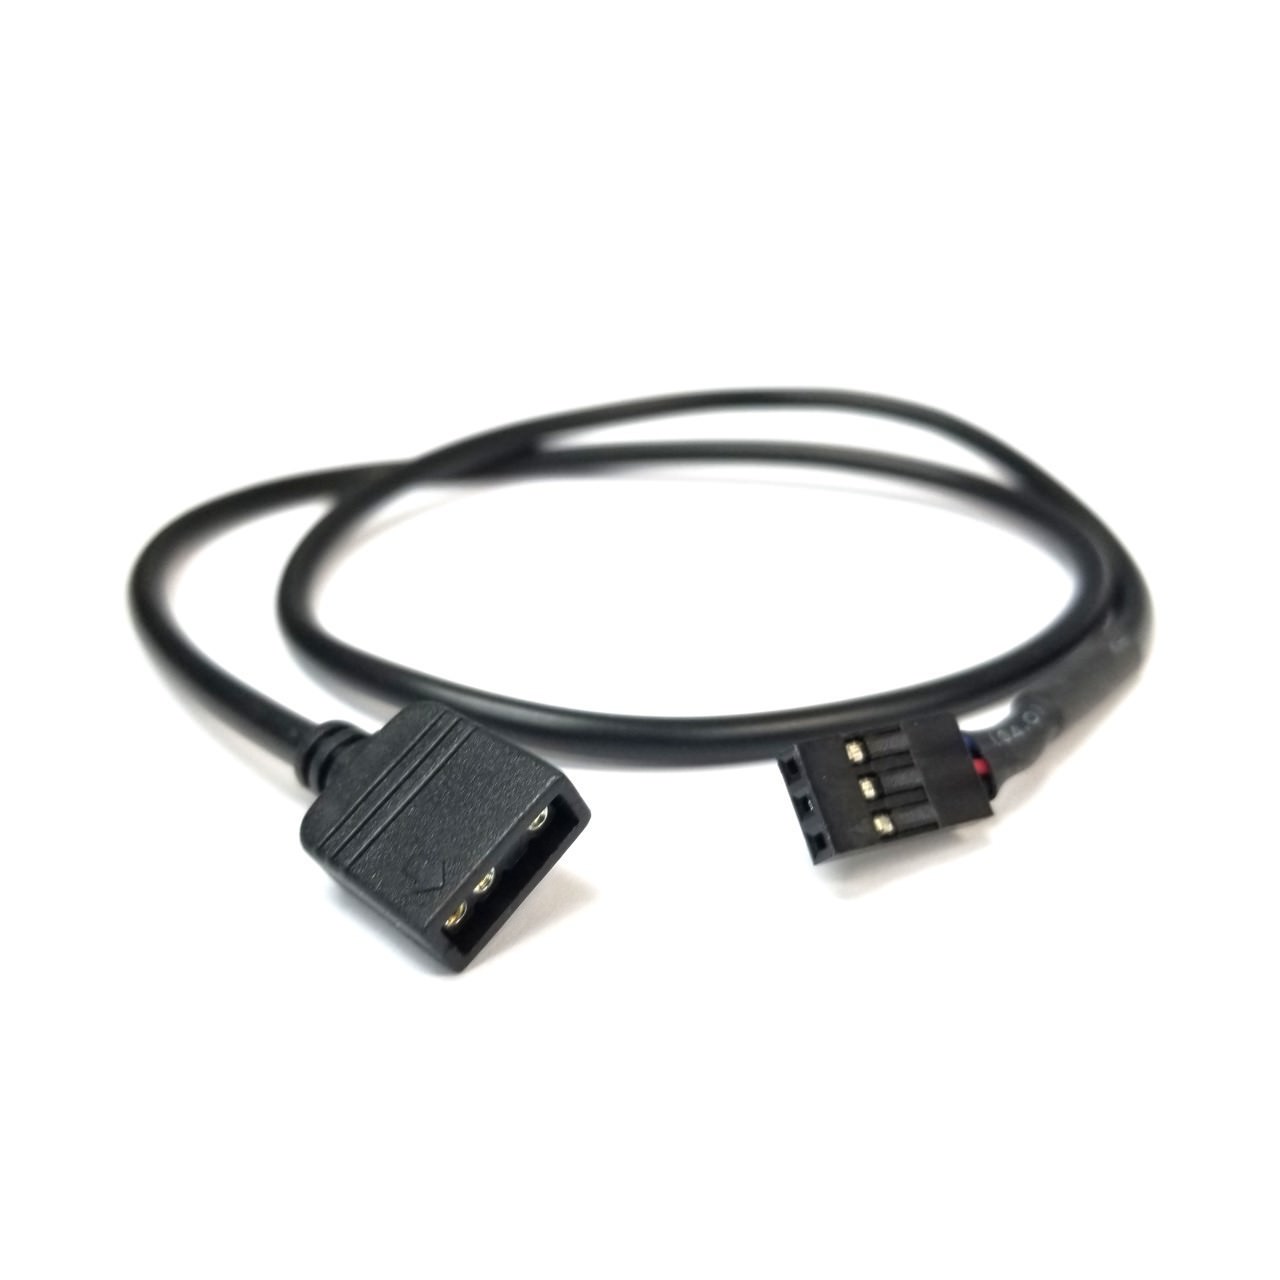 Plons Emulatie Mortal Gigabyte Fusion Addressable 3 Pin 5V VDG to RGB Female Adapter Cable -  modDIY.com